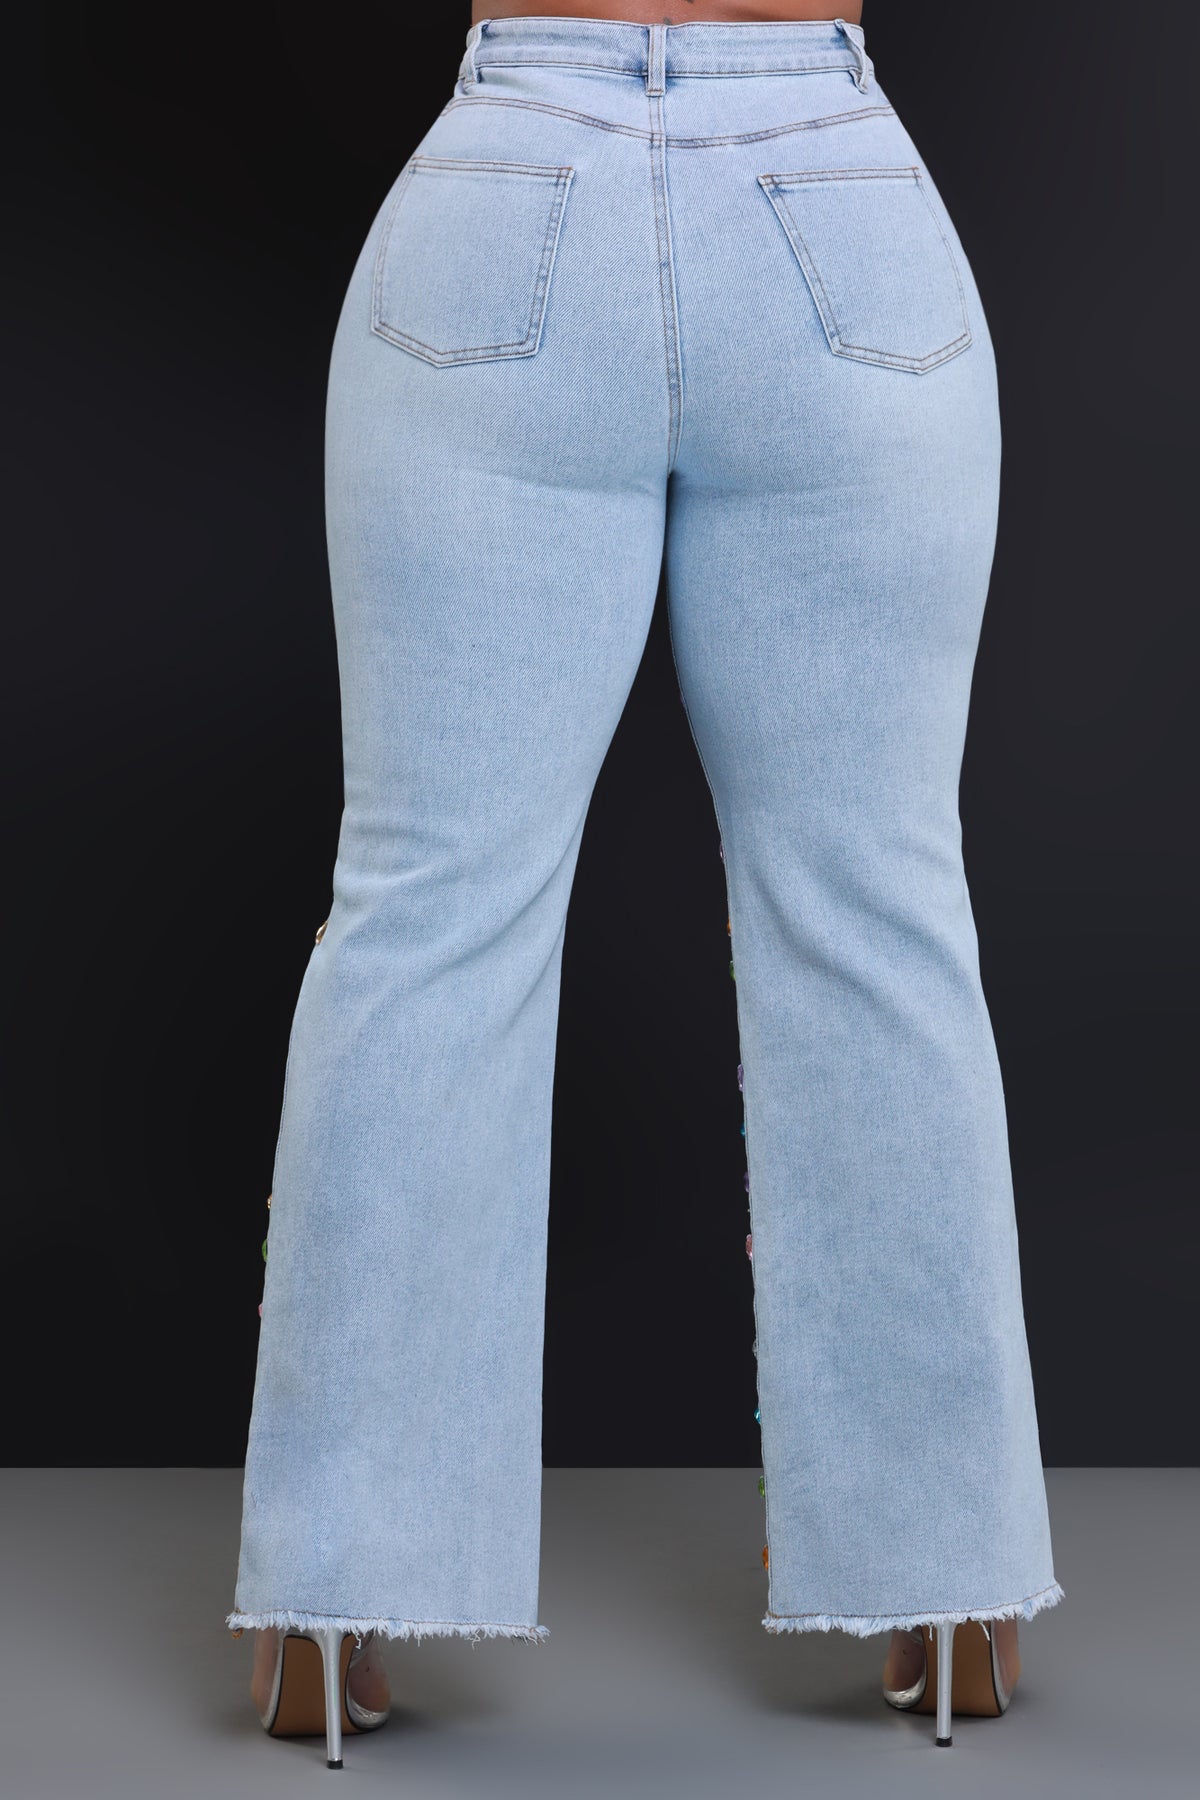 
              Sparkler Rhinestone Studded Straight Leg Jeans - Light Wash - Swank A Posh
            